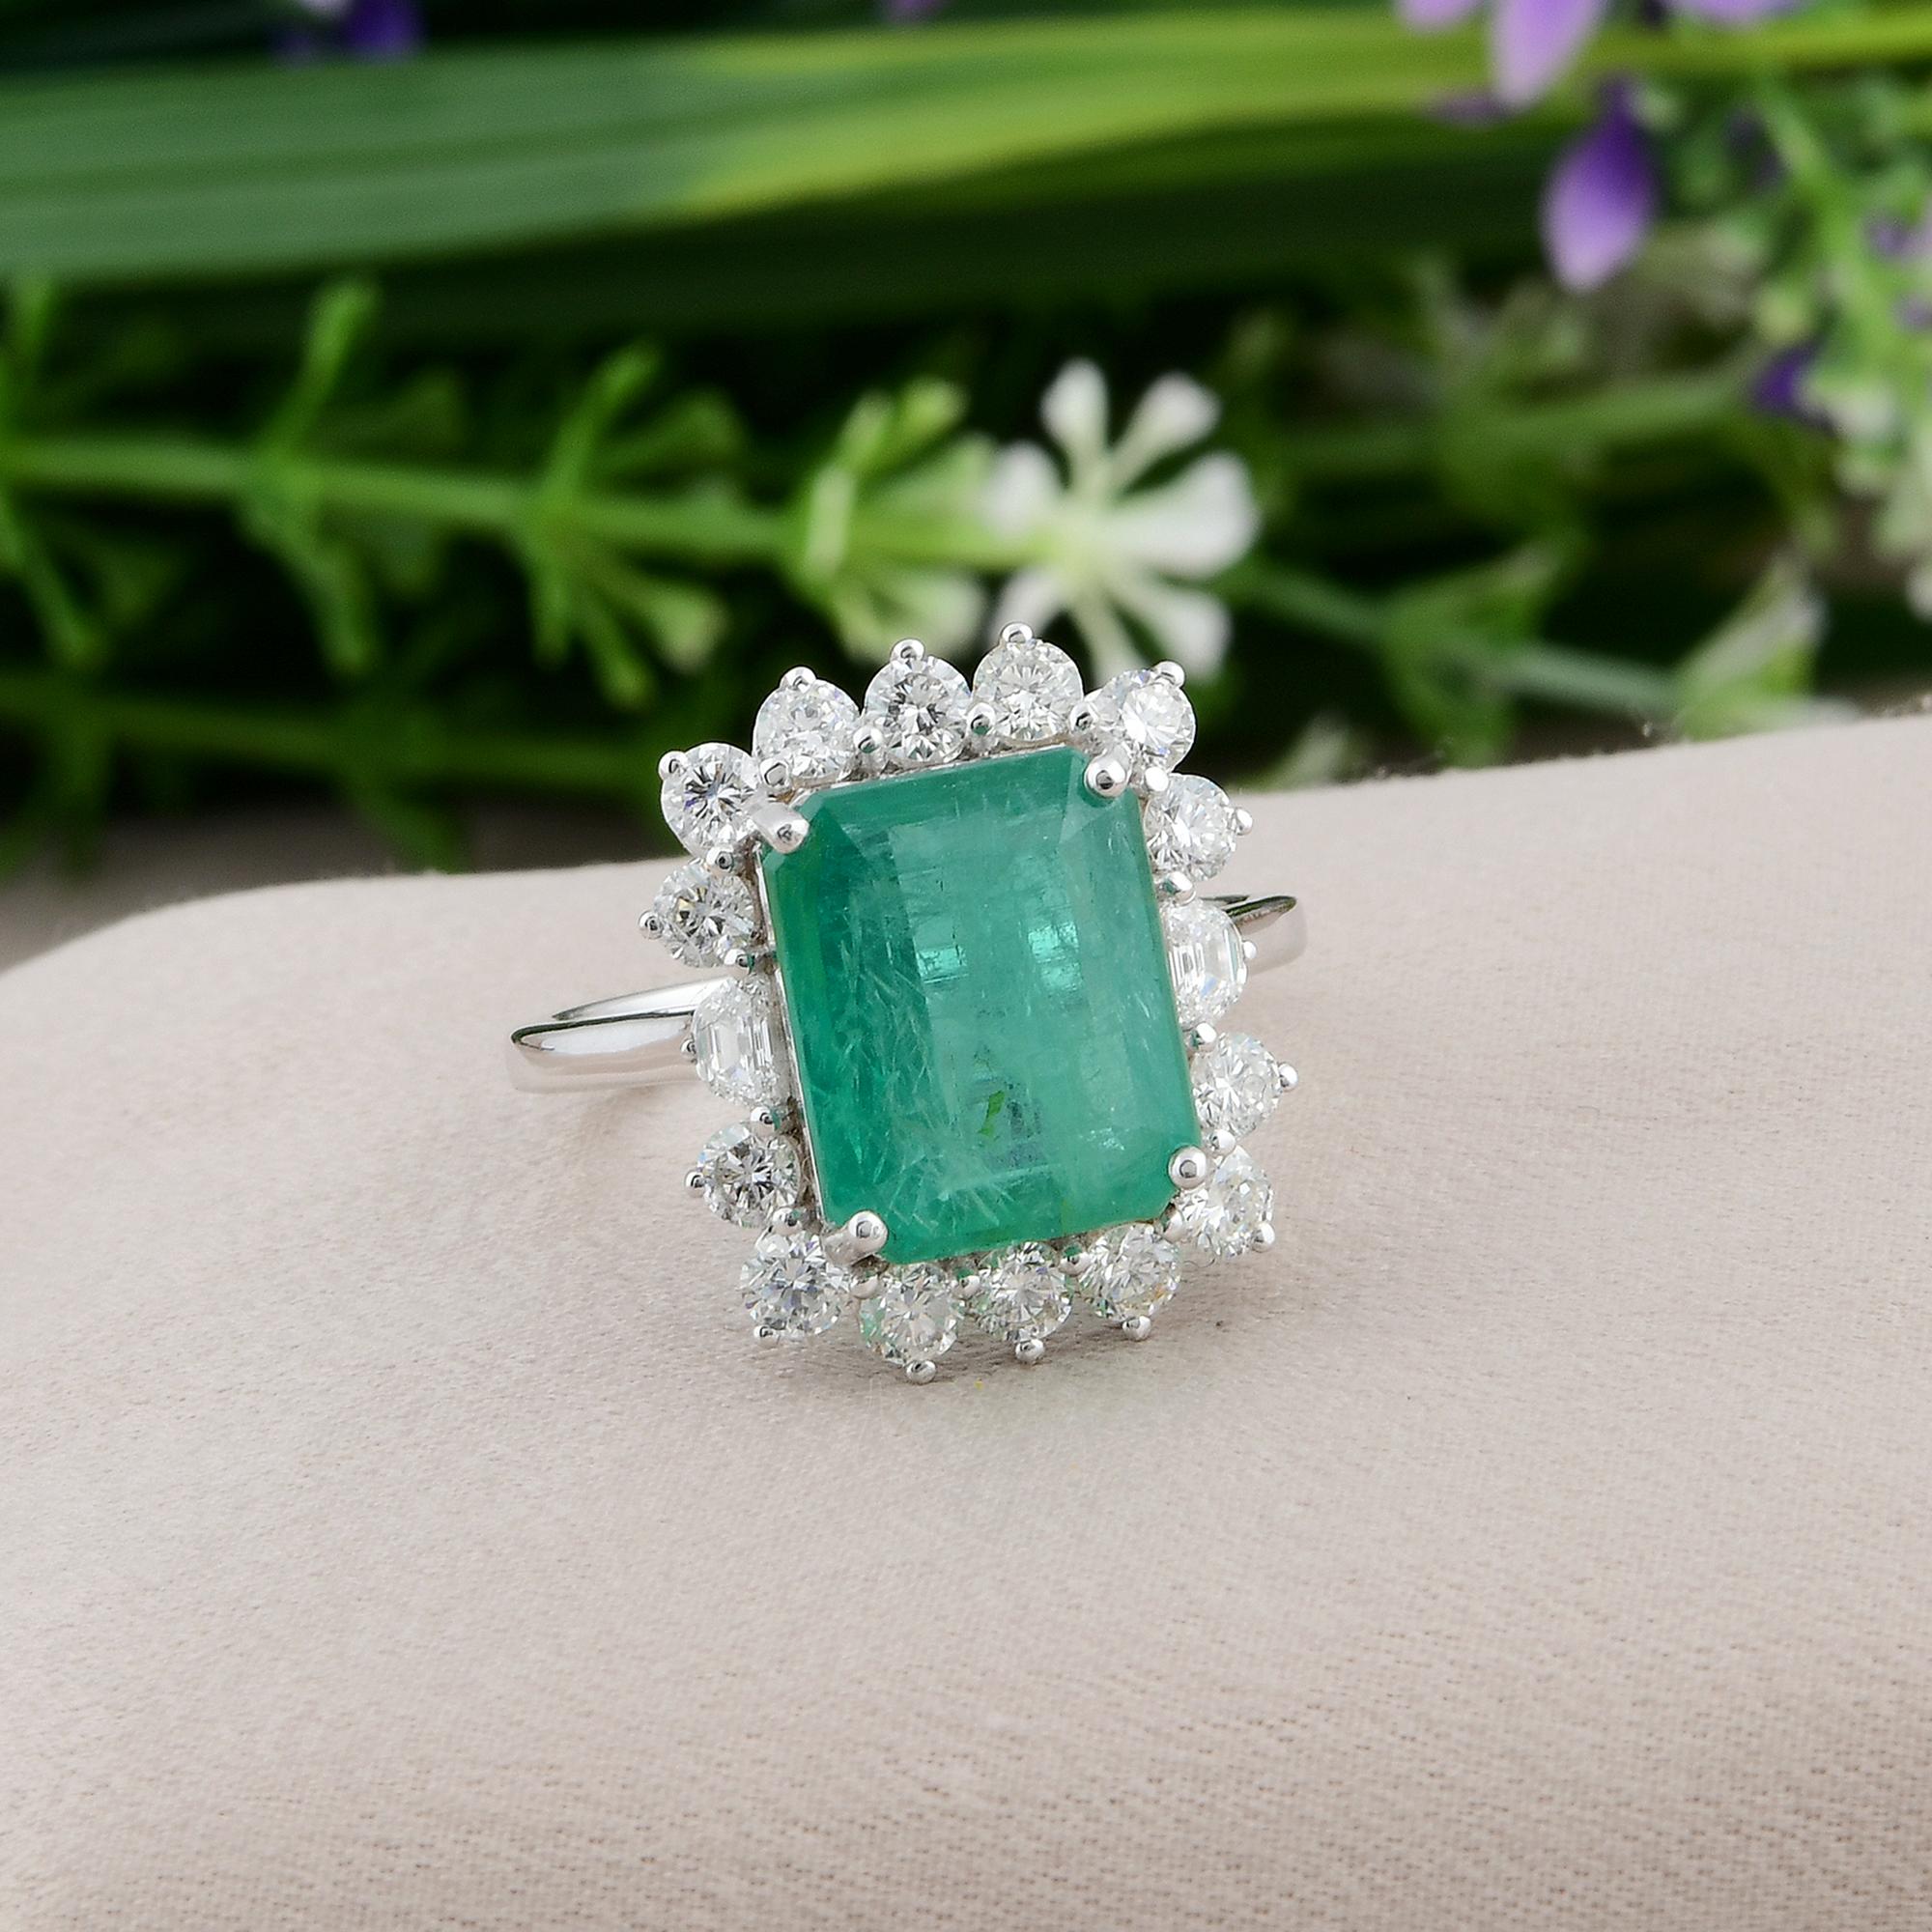 For Sale:  Natural Emerald Gemstone Cocktail Ring Diamond 18 Karat White Gold Jewelry 3